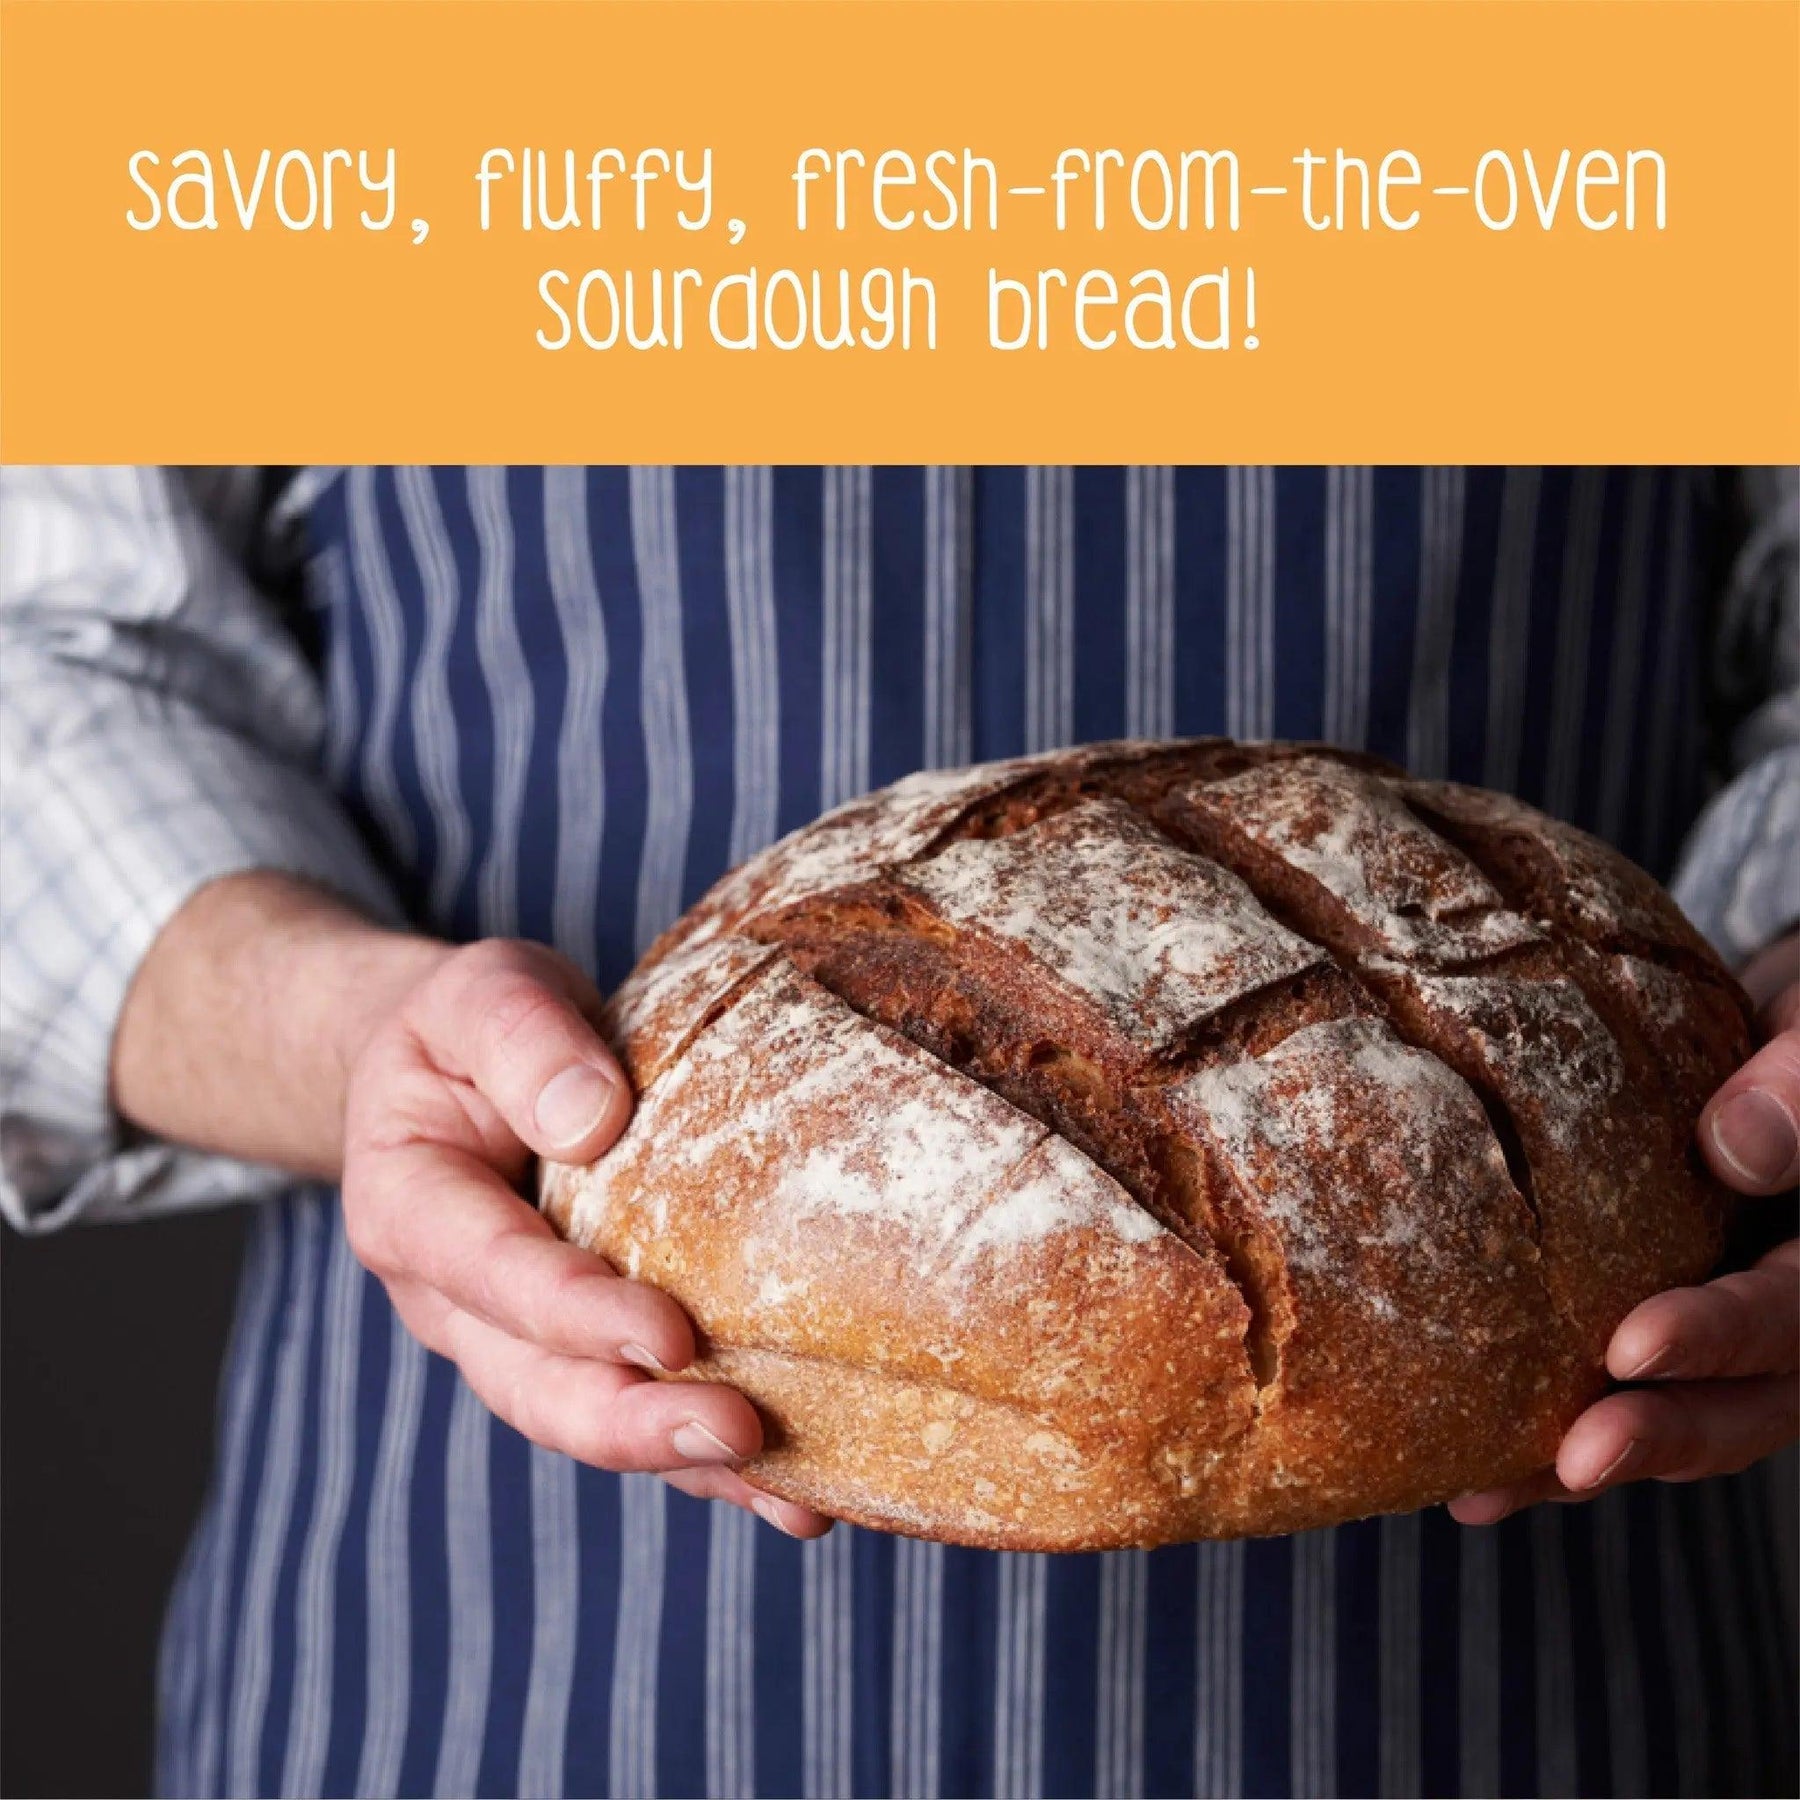 Fresh Savoury and Fluffy San Francisco Sourdough Bread by Zoh Probiotics